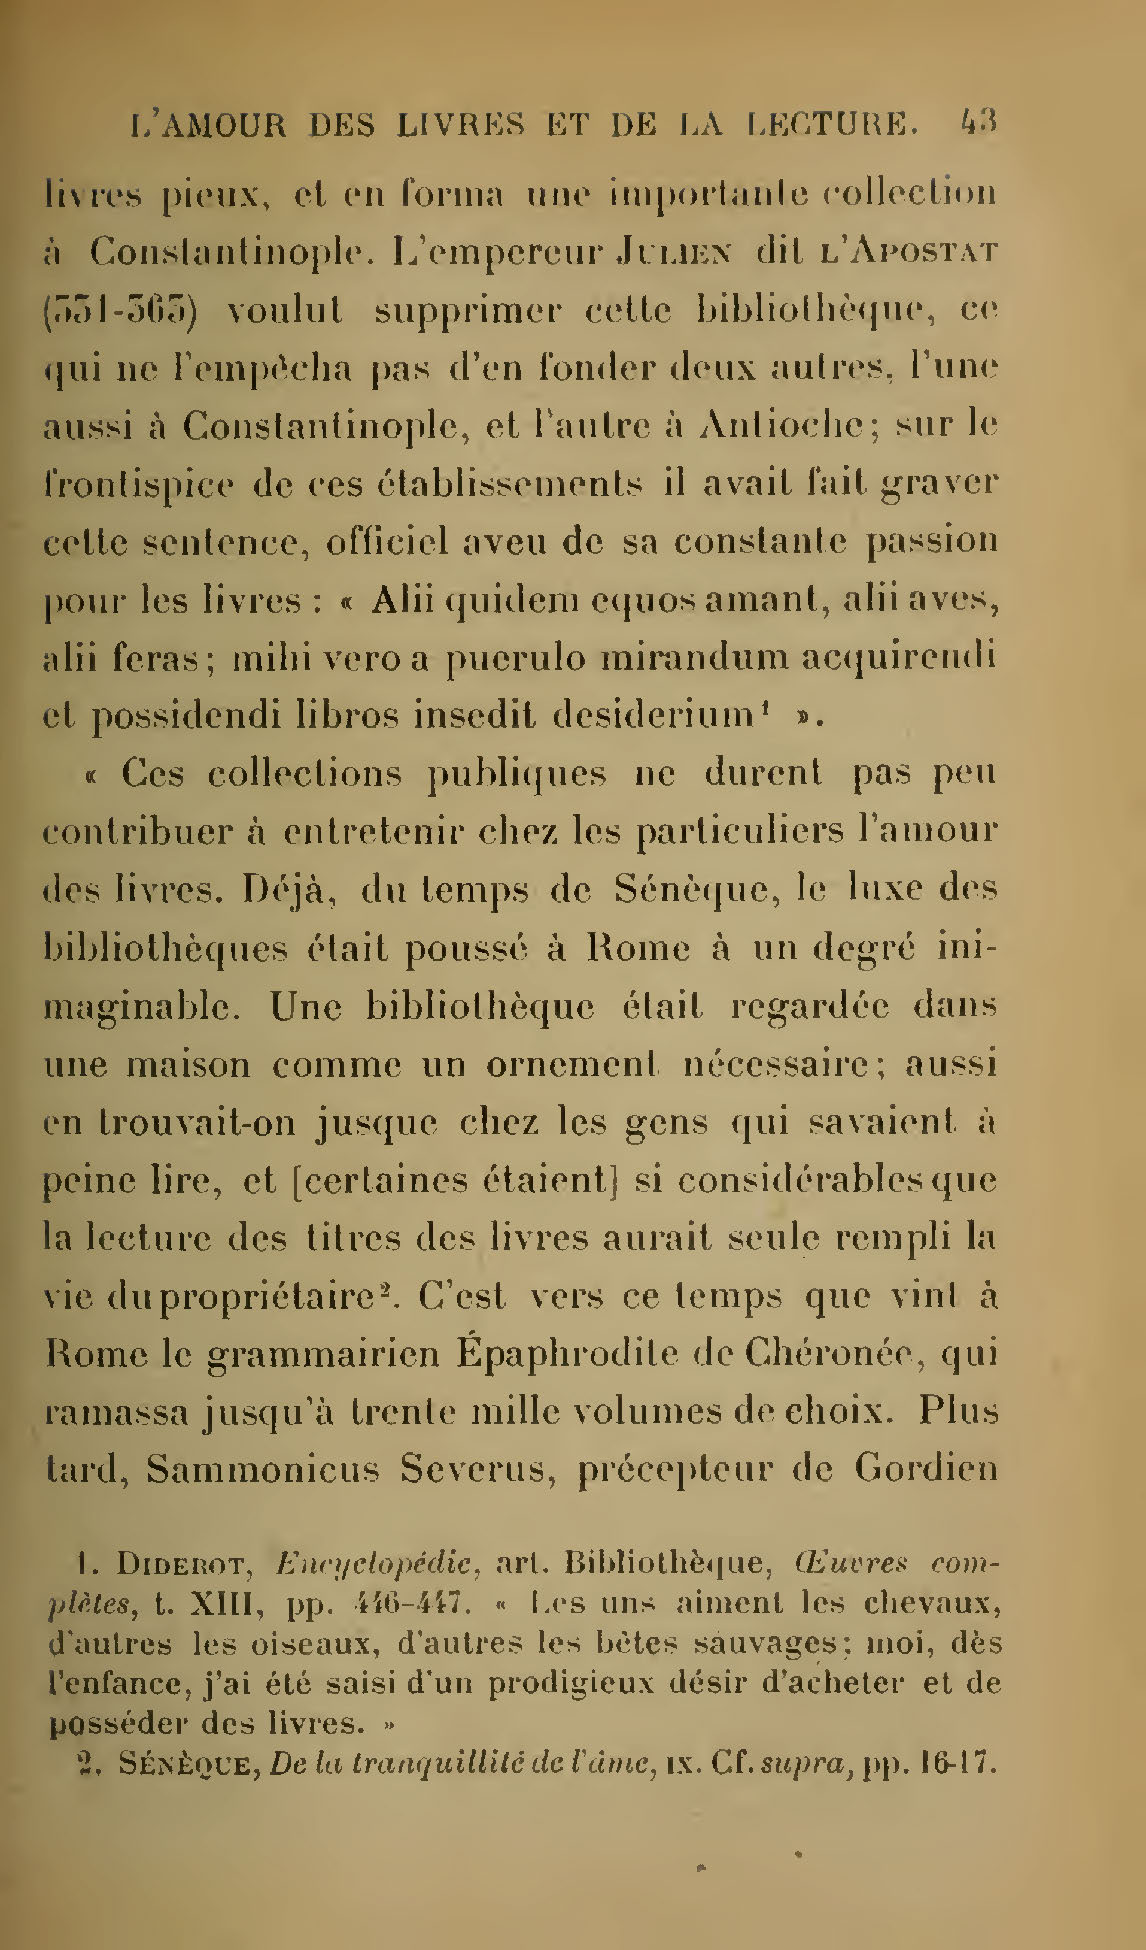 Albert Cim, Le Livre, t. I, p. 43.